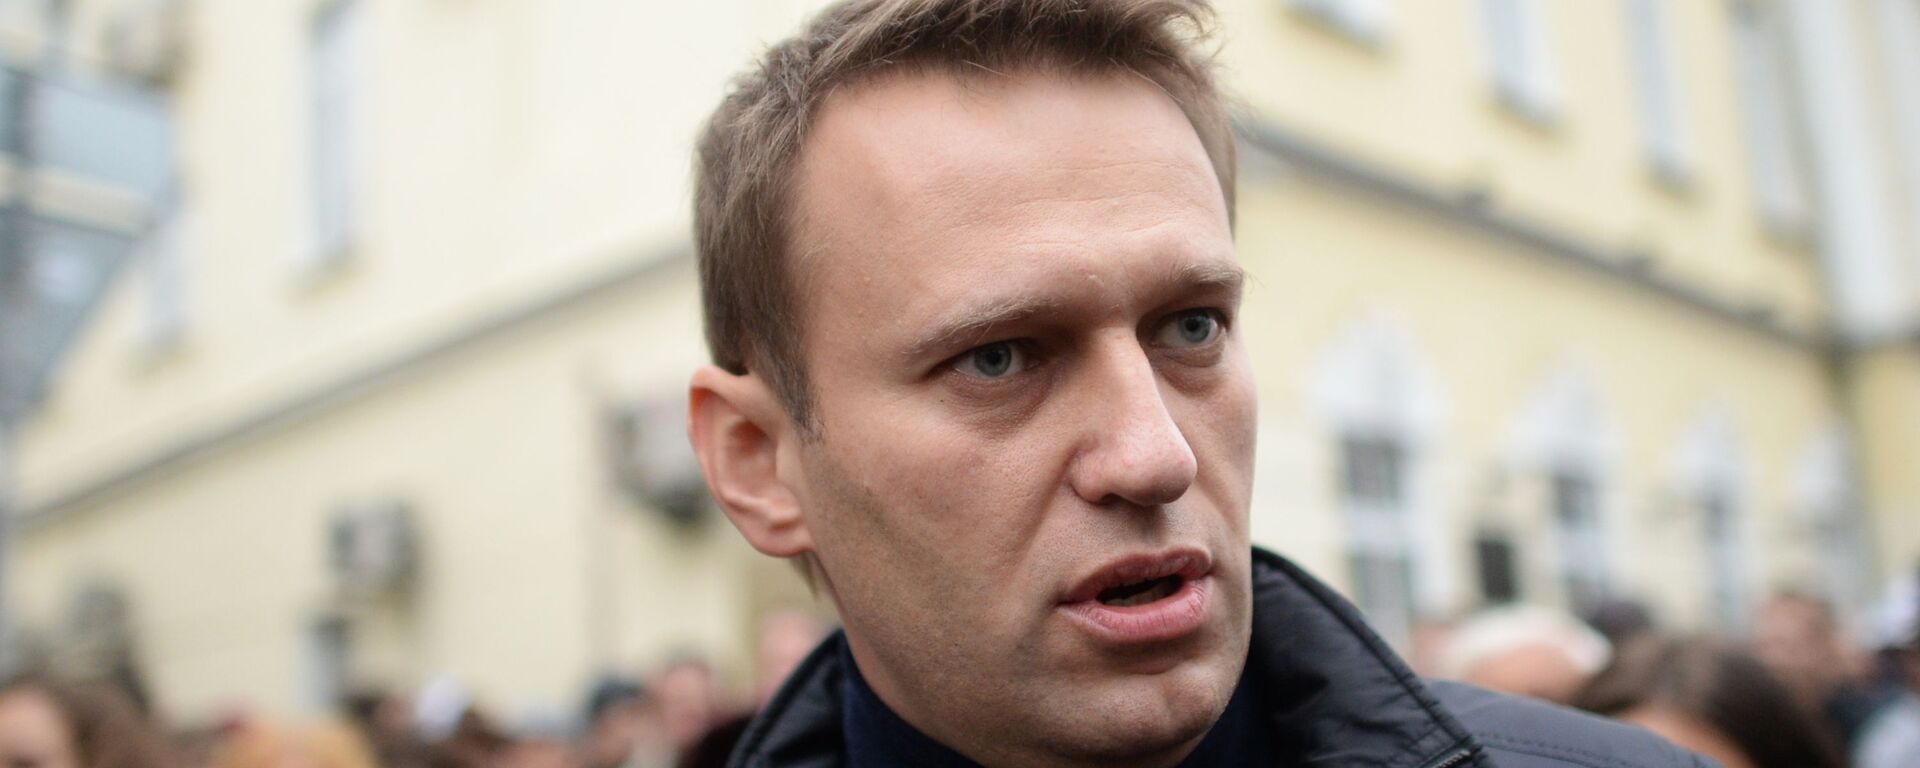 Alexéi Navalni, activista opositor ruso - Sputnik Mundo, 1920, 29.04.2021